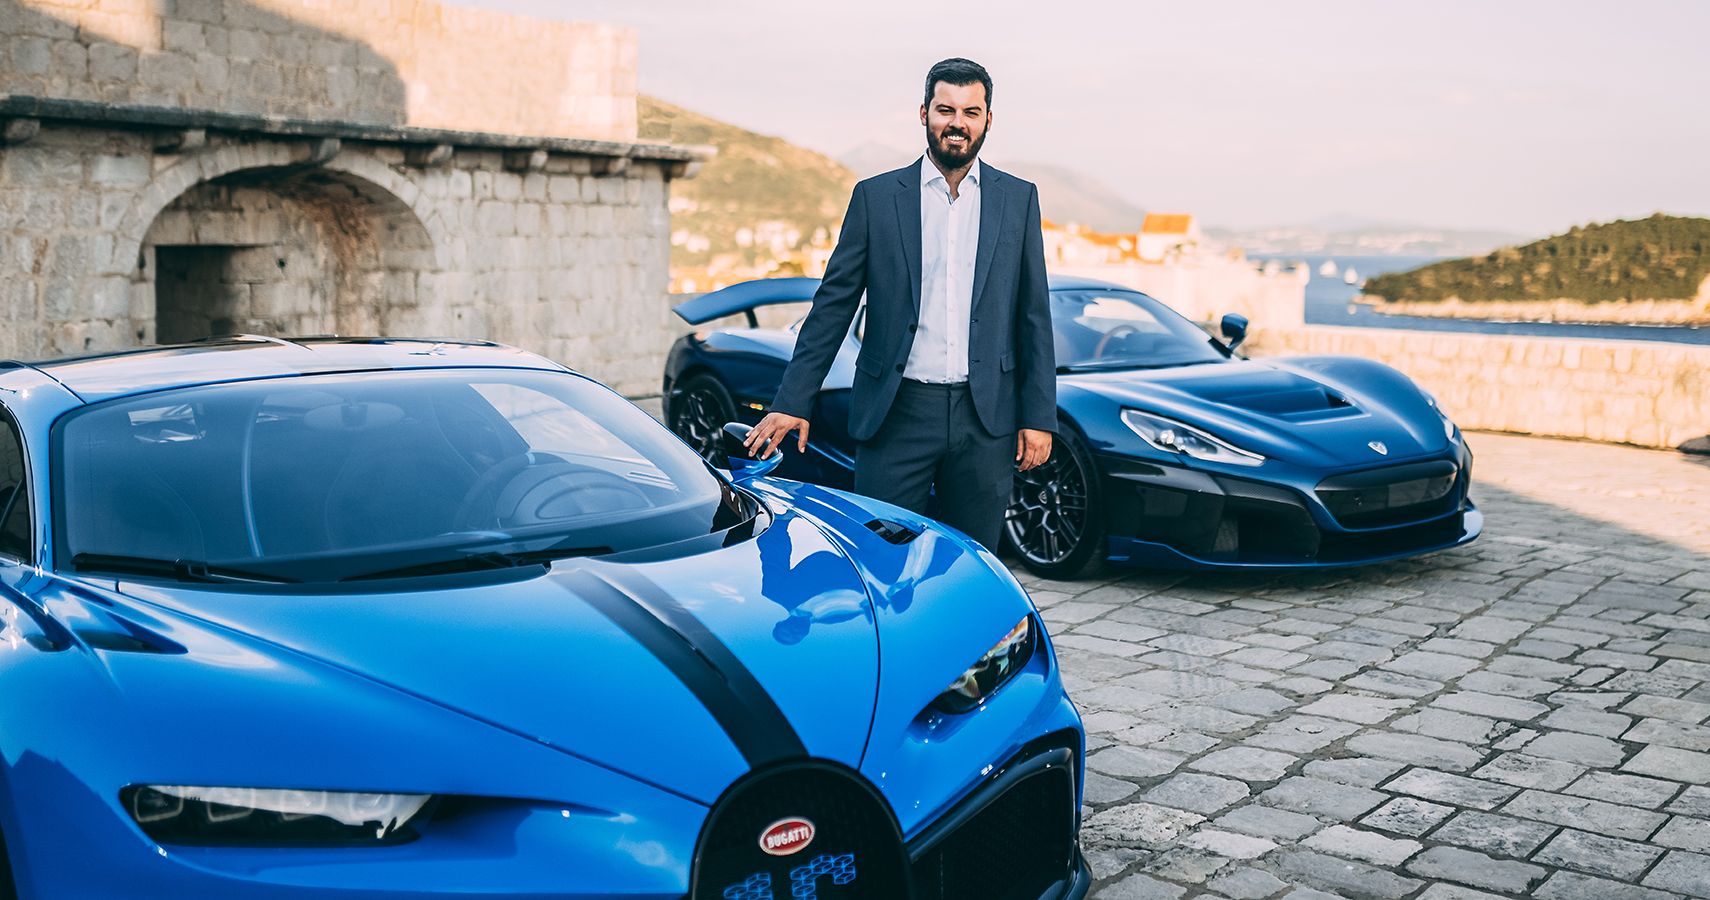 Bugatti Rimac CEO Mate Rimac